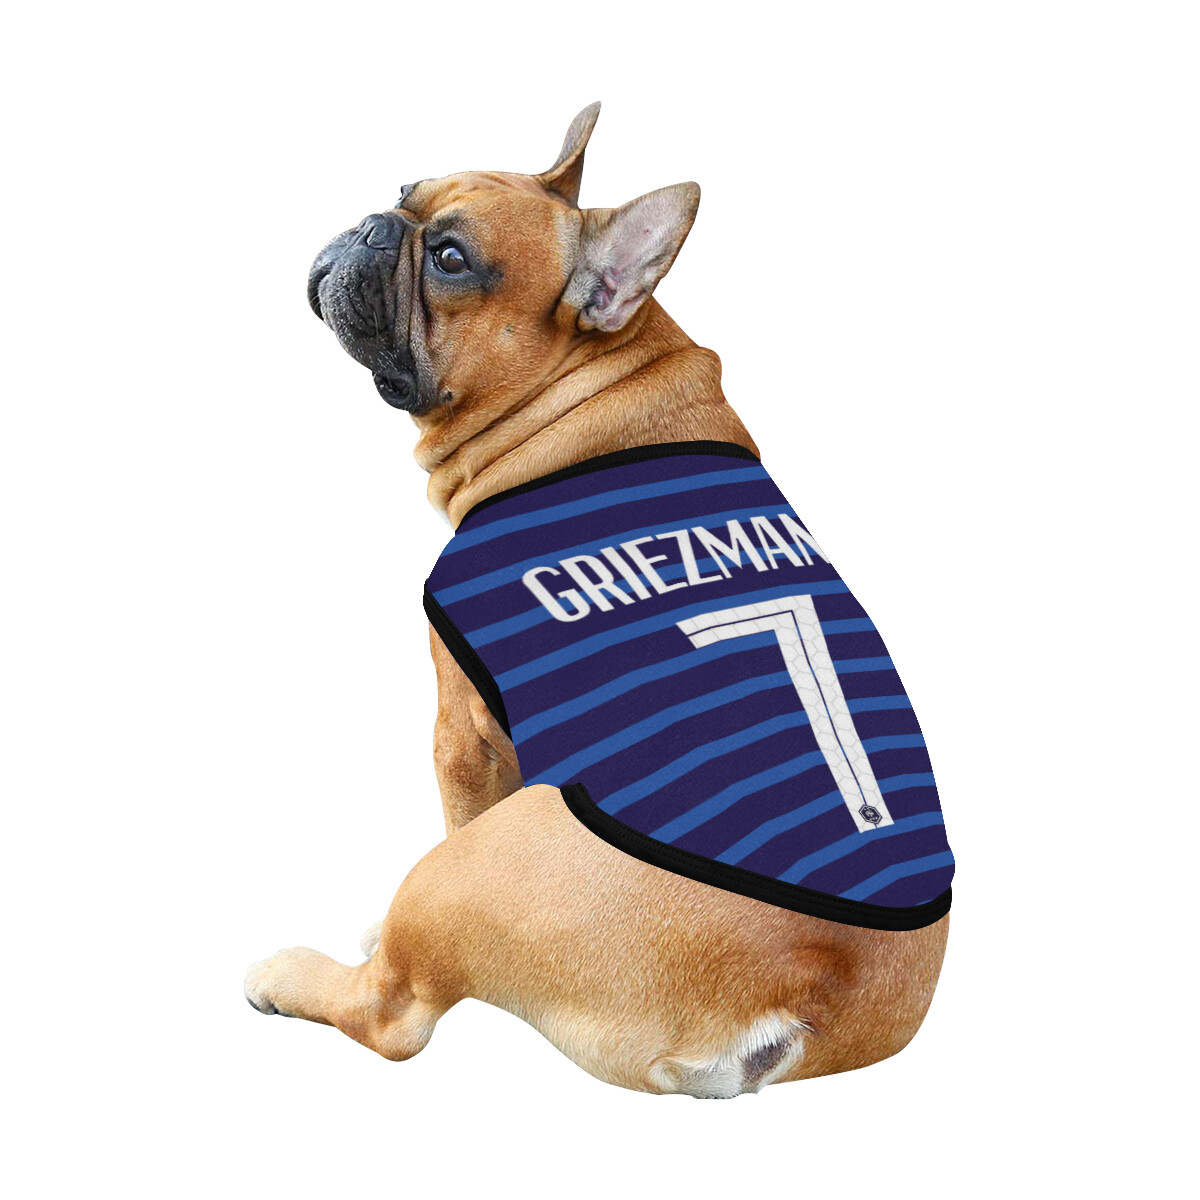 🐕🇫🇷⚽️ Allez les Bleus, France Soccer Team, Antoine Griezmann, 7, Dog t-shirt, Dog Tank Top, Dog shirt, Dog clothes, Dog jersey, Gift, 7 sizes XS to 3XL, French, I love sports